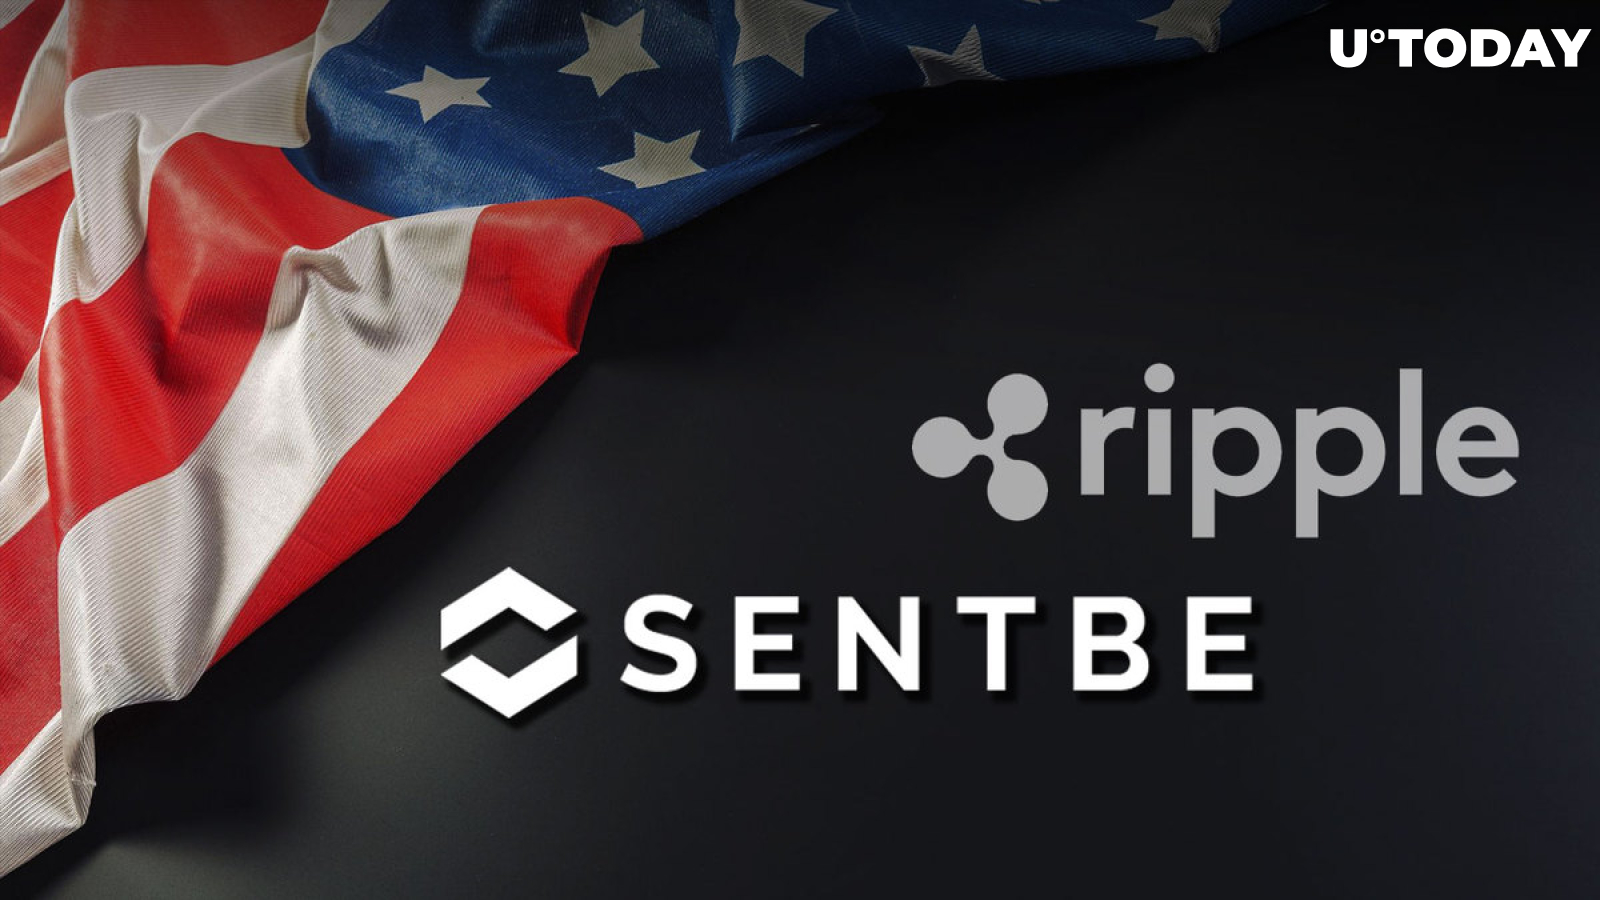 Ripple's Korean Partner SentBe Announces Expansion to U.S.